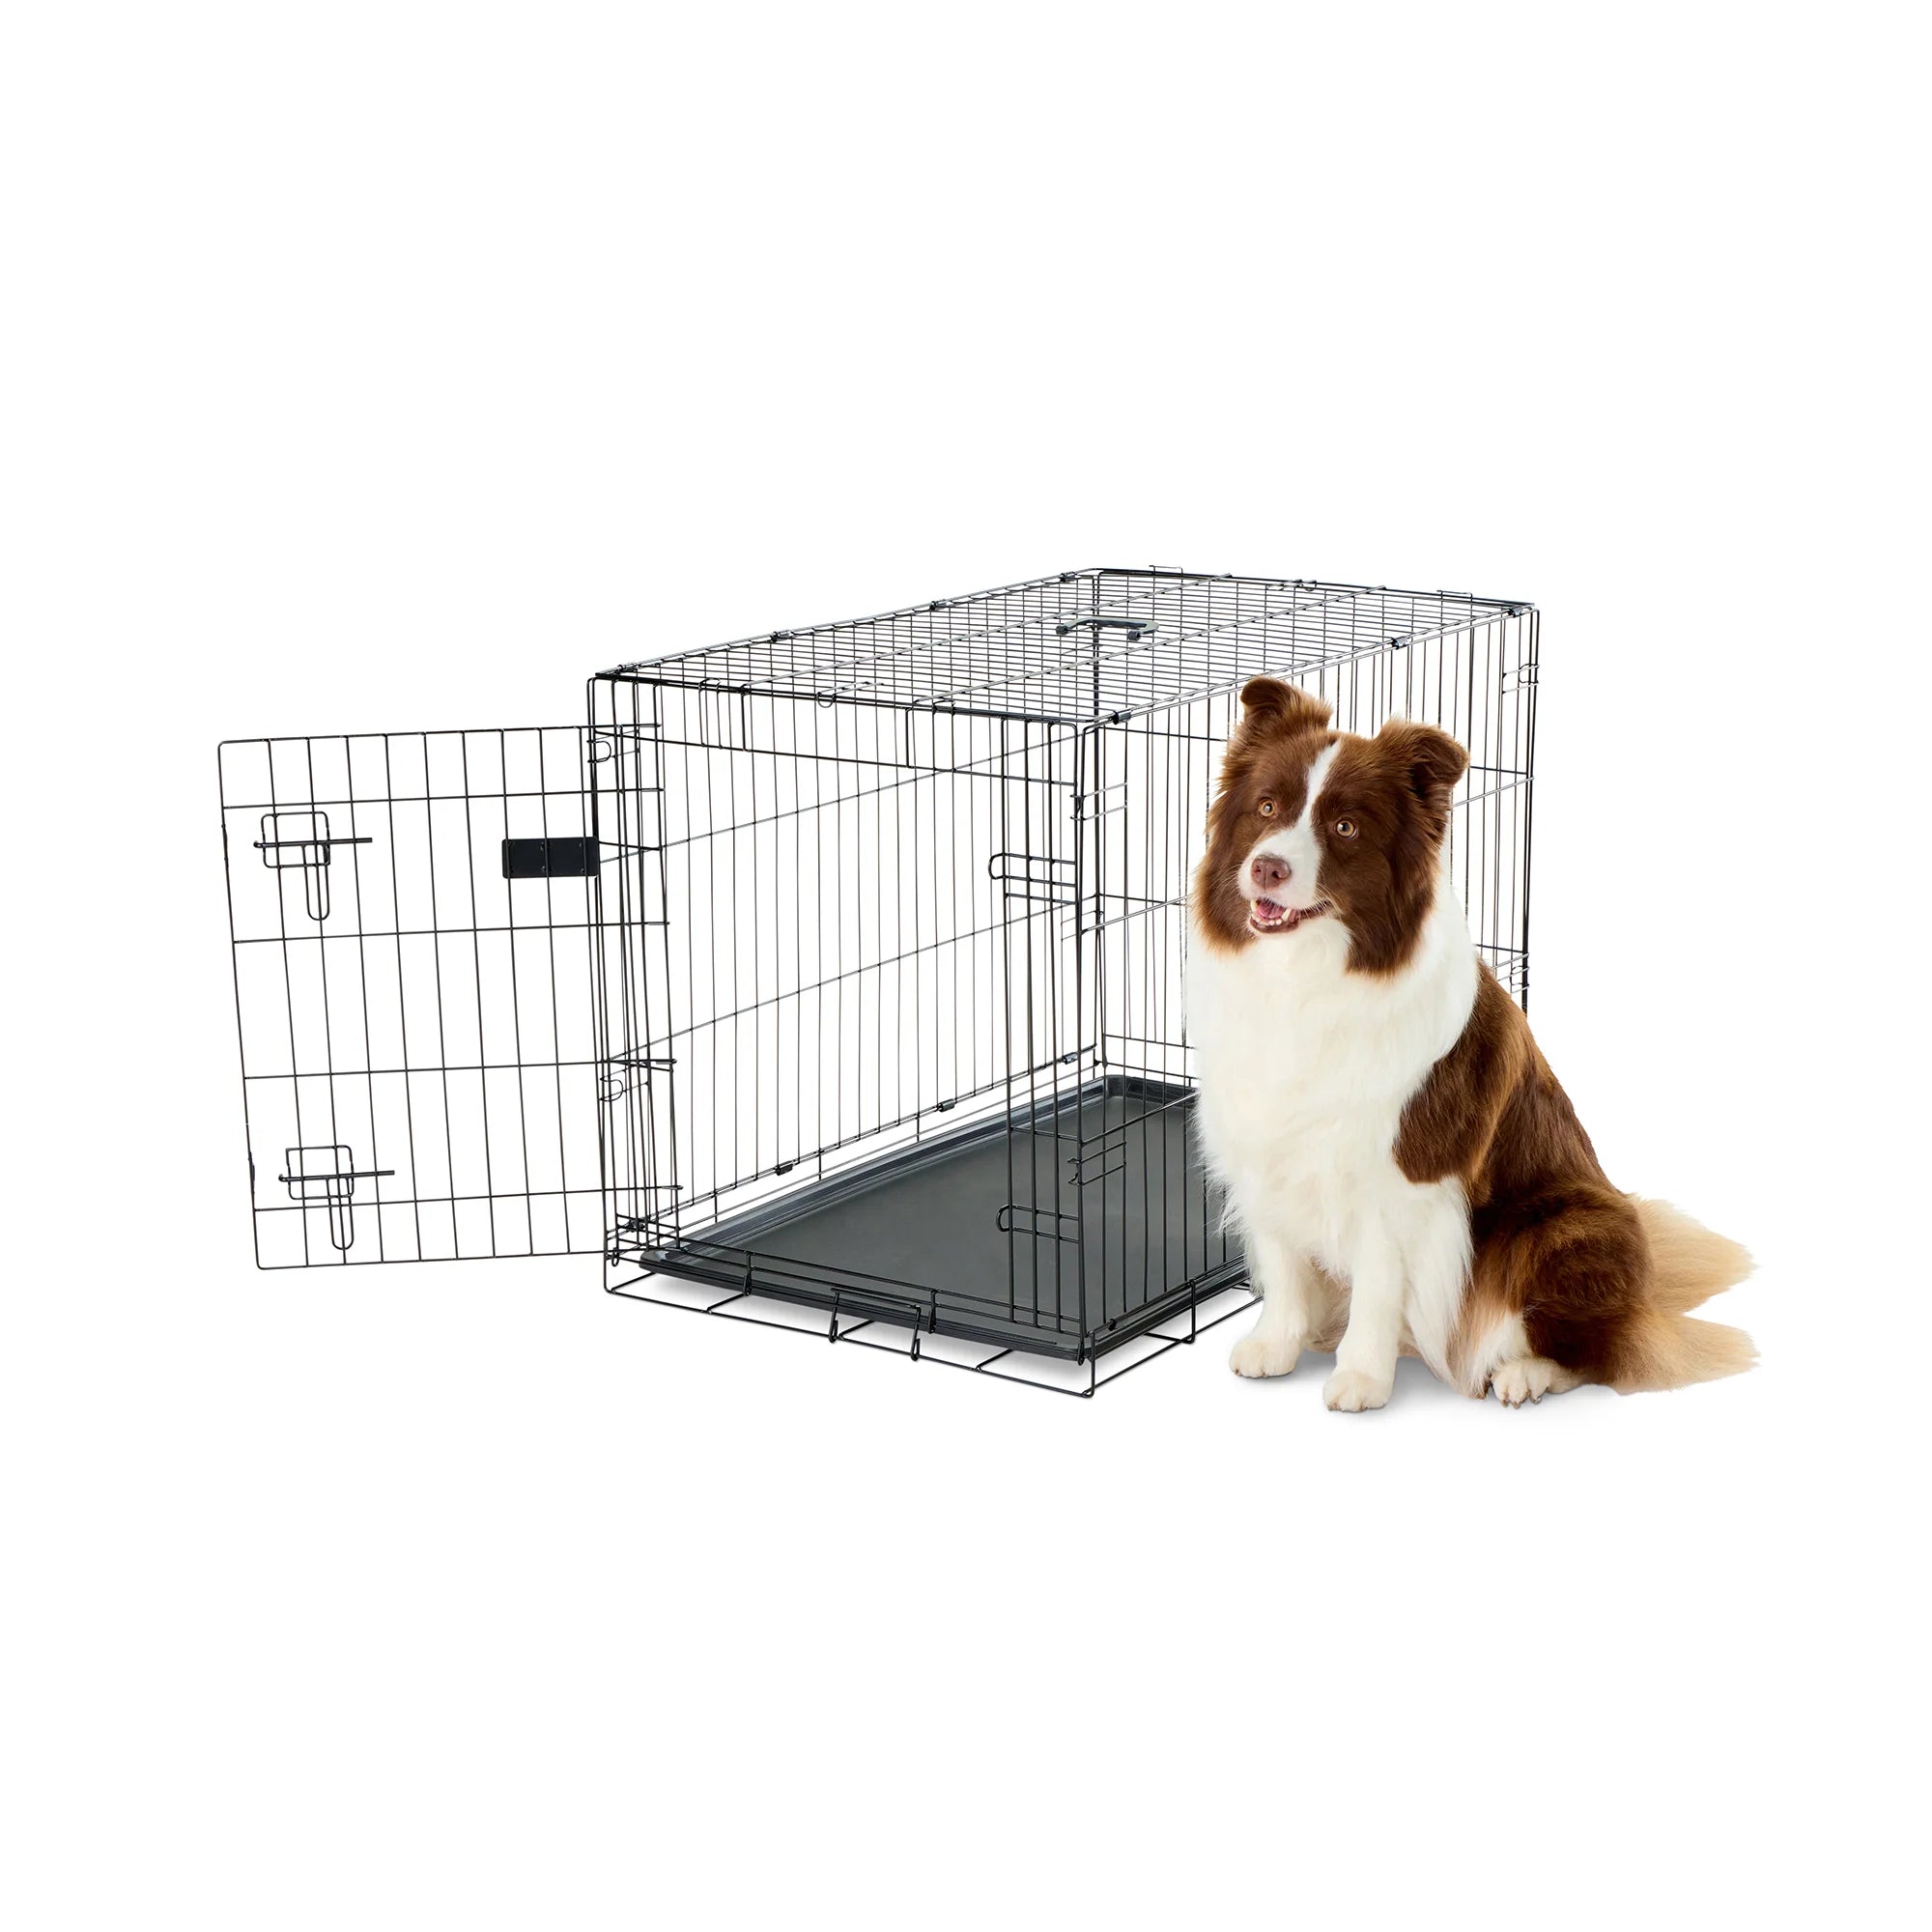 Carlson Intermediate Dog Crate on white background.